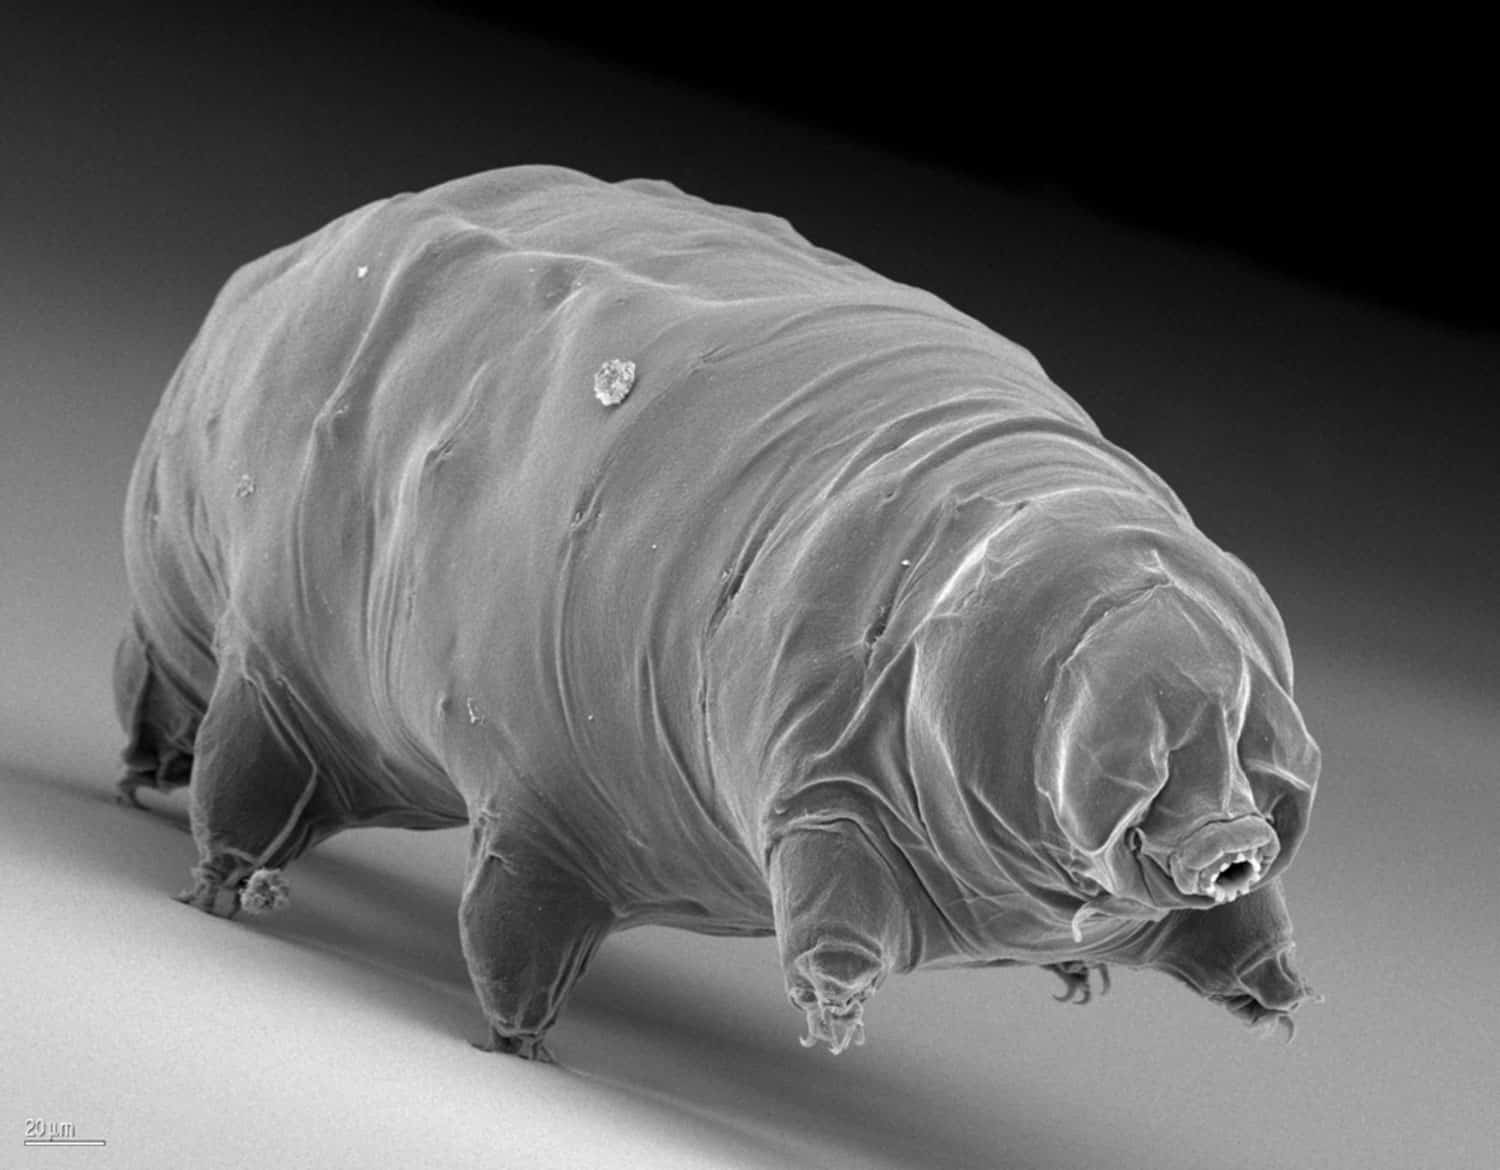 How do tardigrades survive freezing temperatures?